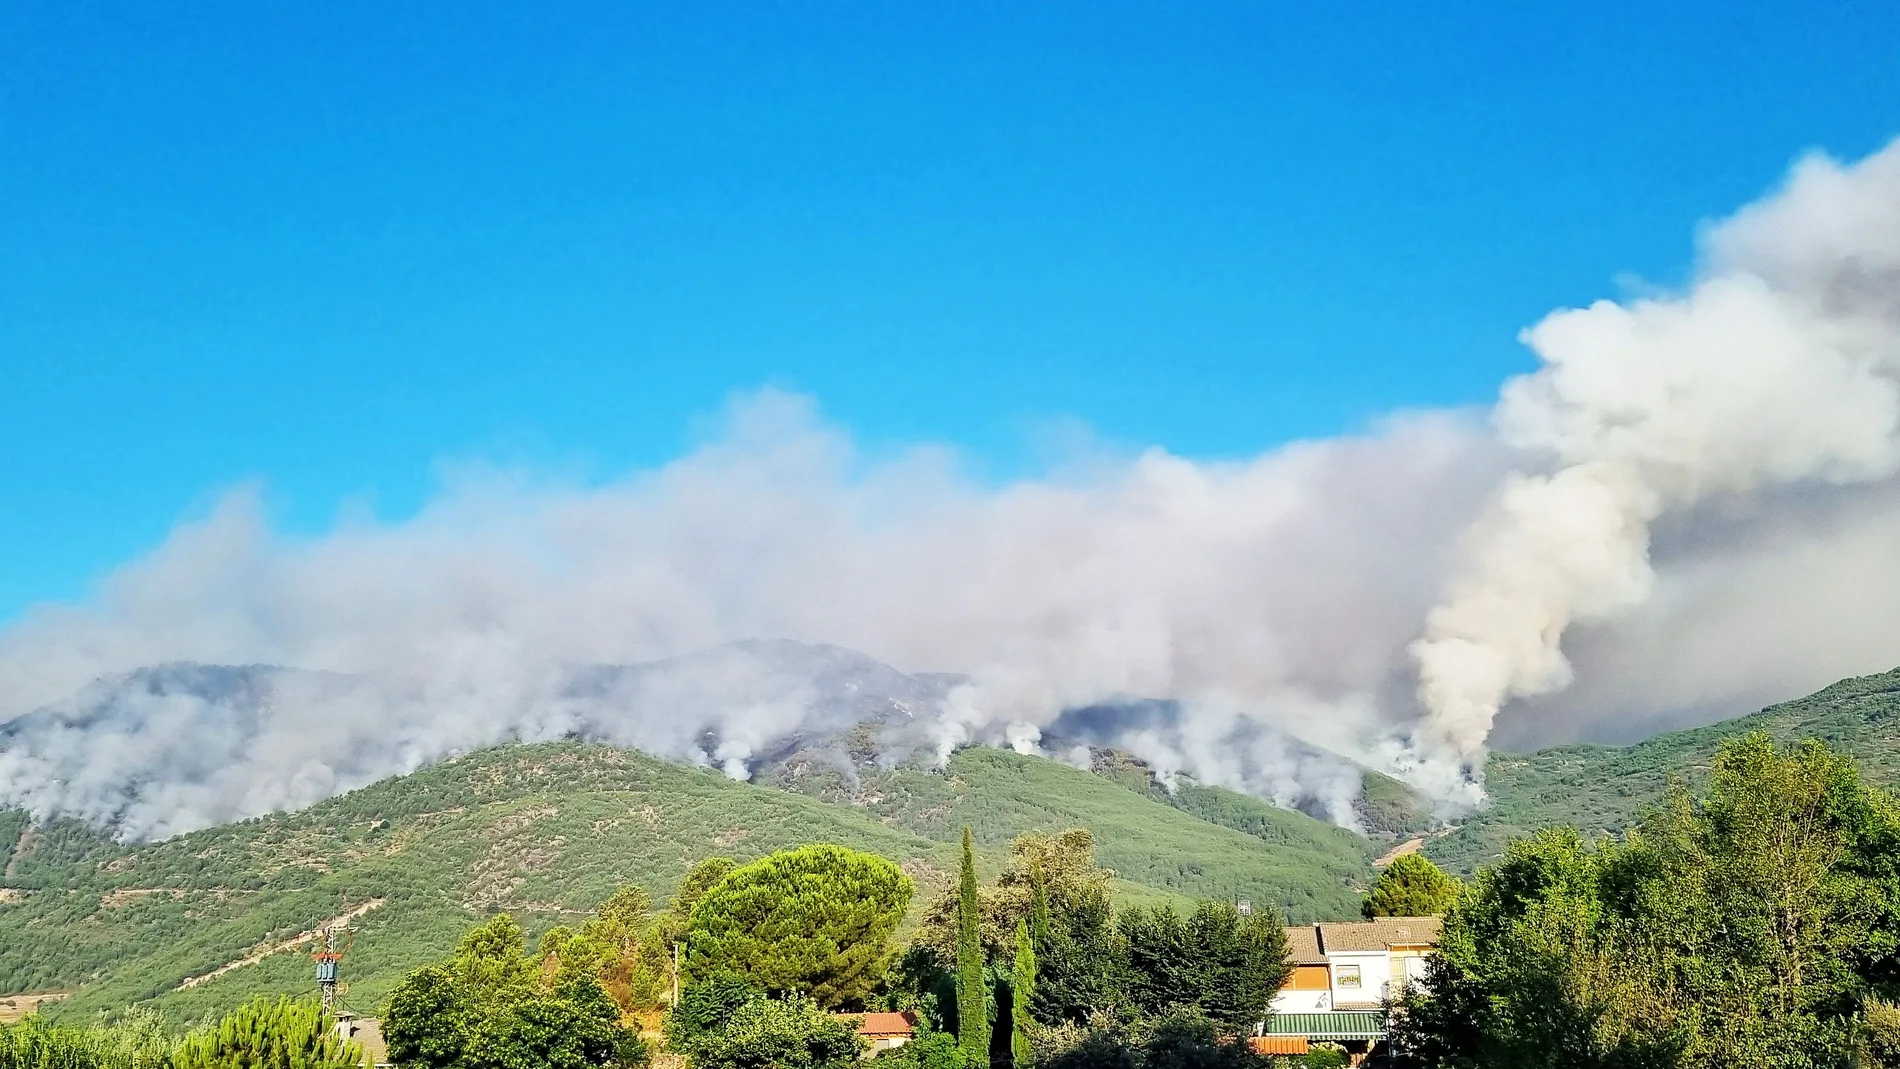 Incendio en Santa Cruz del Valle (Ávila) visto desde Pedro Bernardo